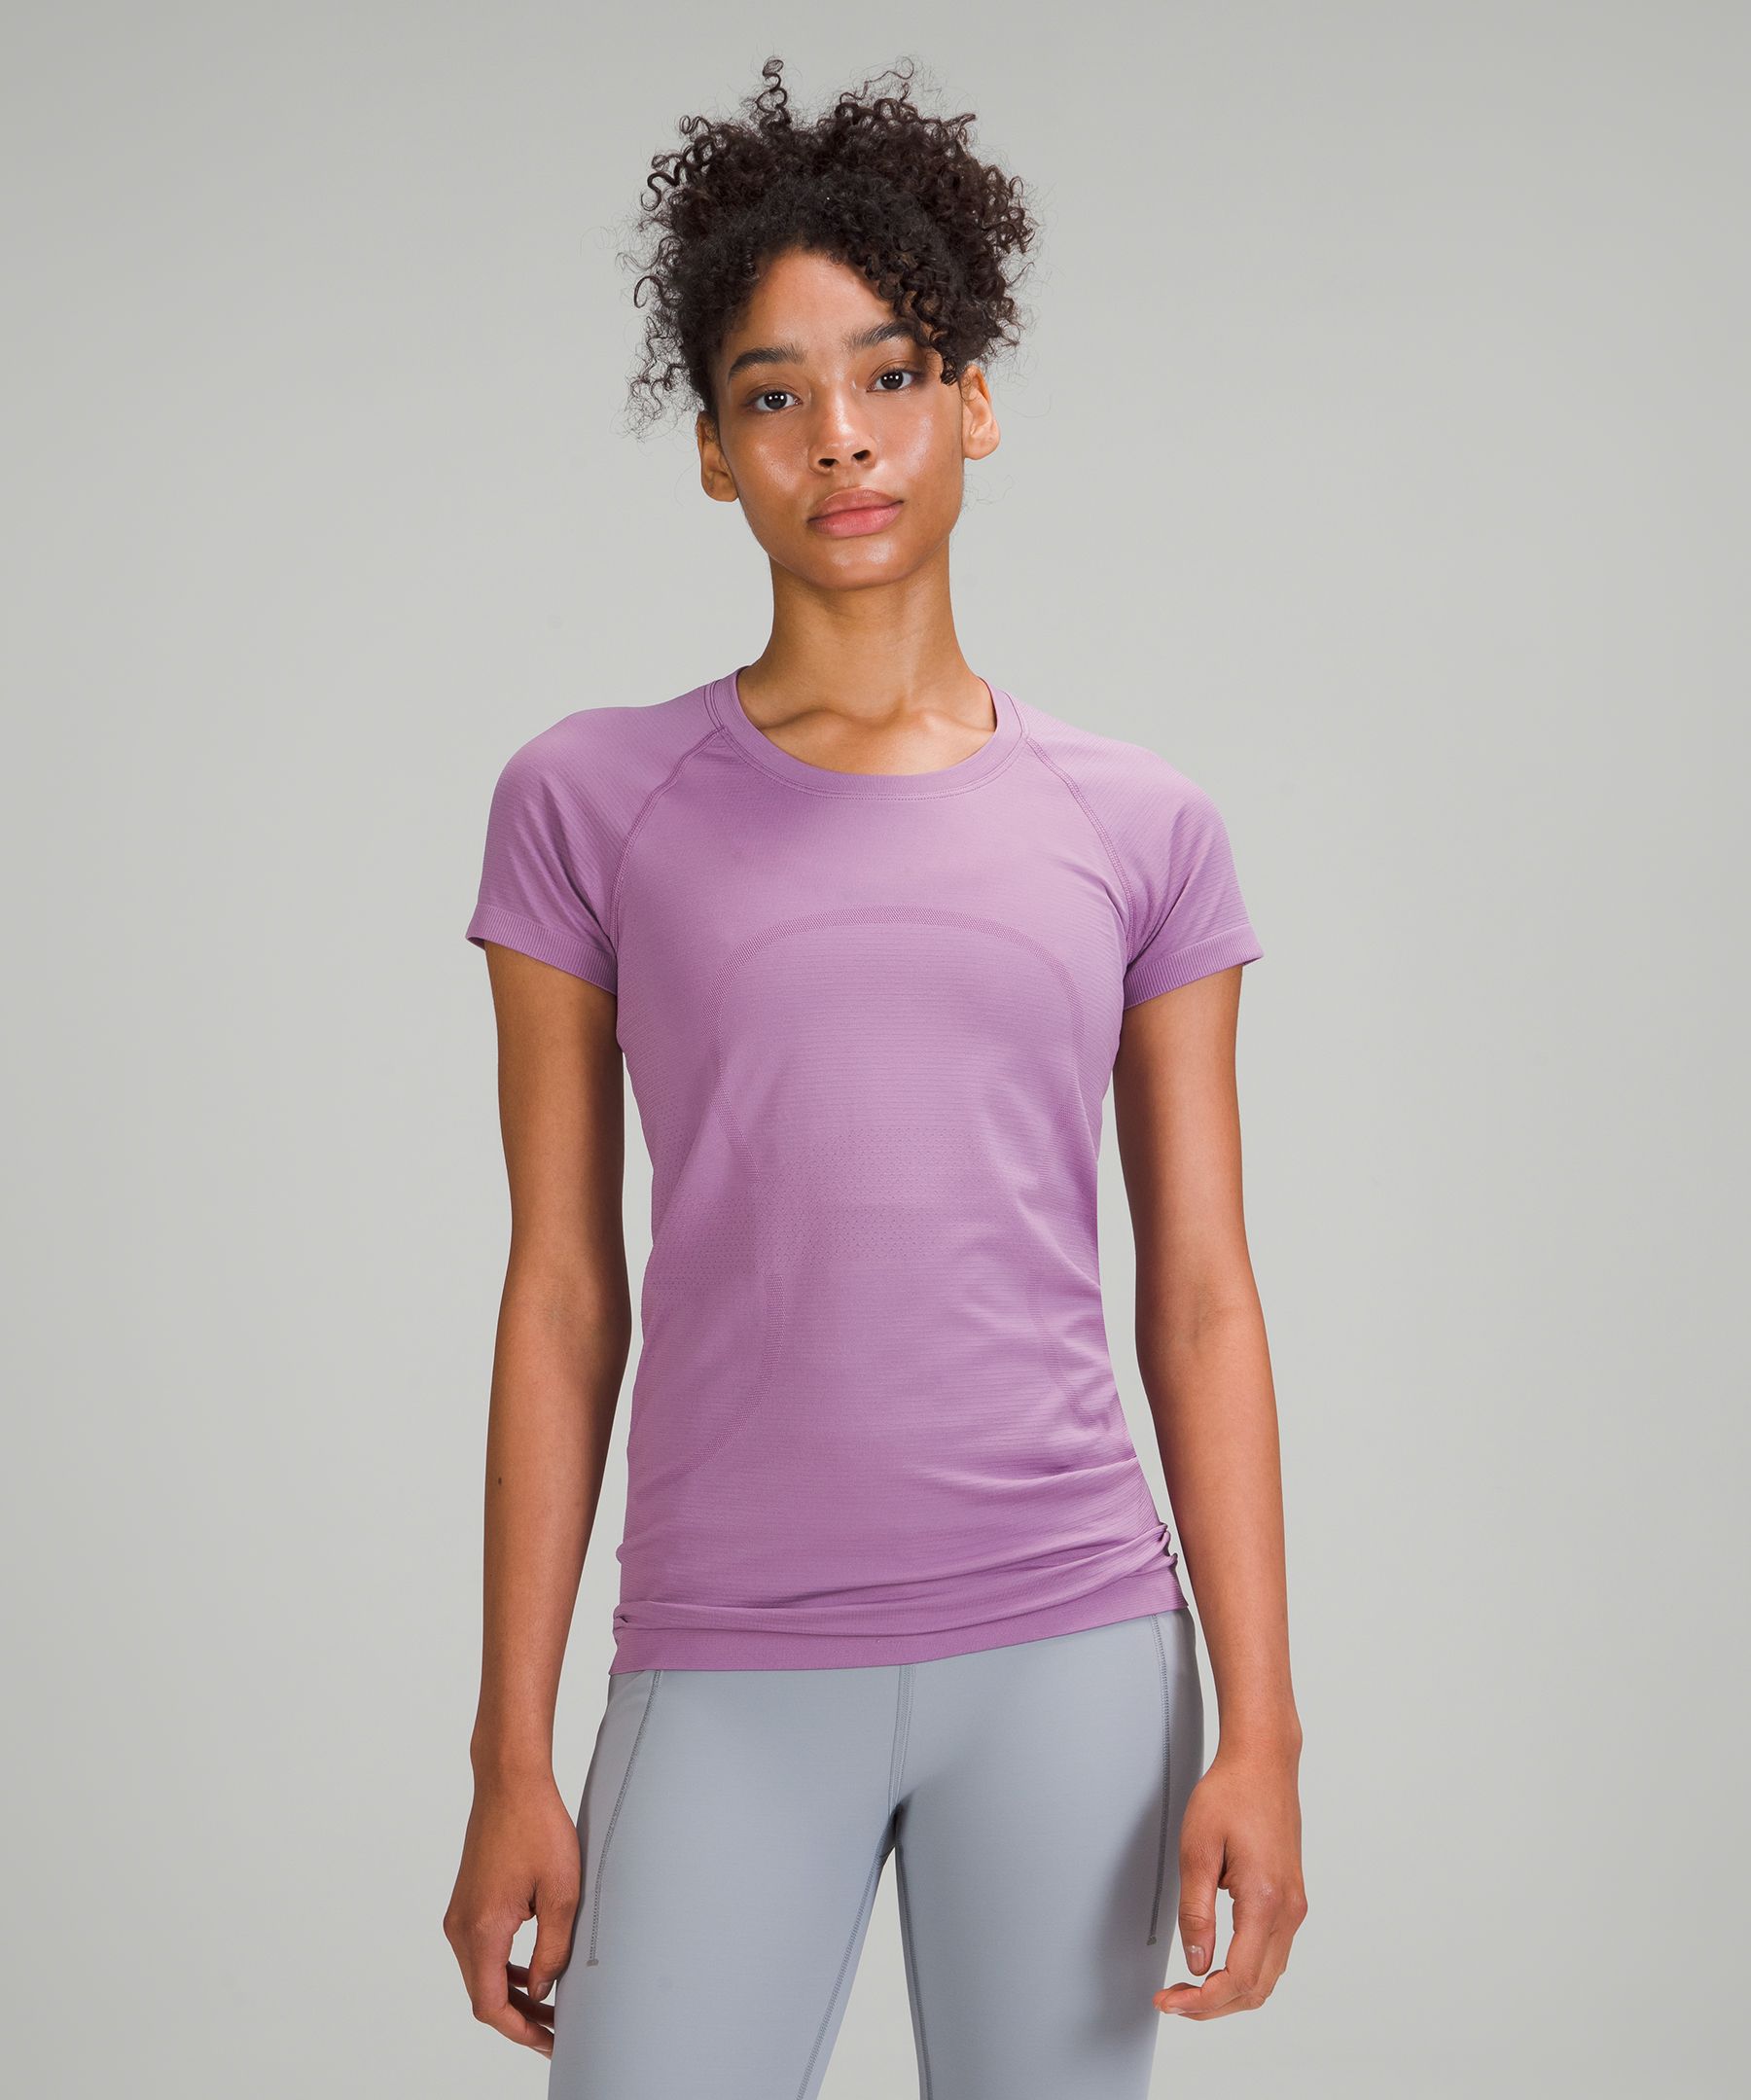 Lululemon Swiftly Tech Short Sleeve Shirt 2.0 In Wisteria Purple/wisteria Purple